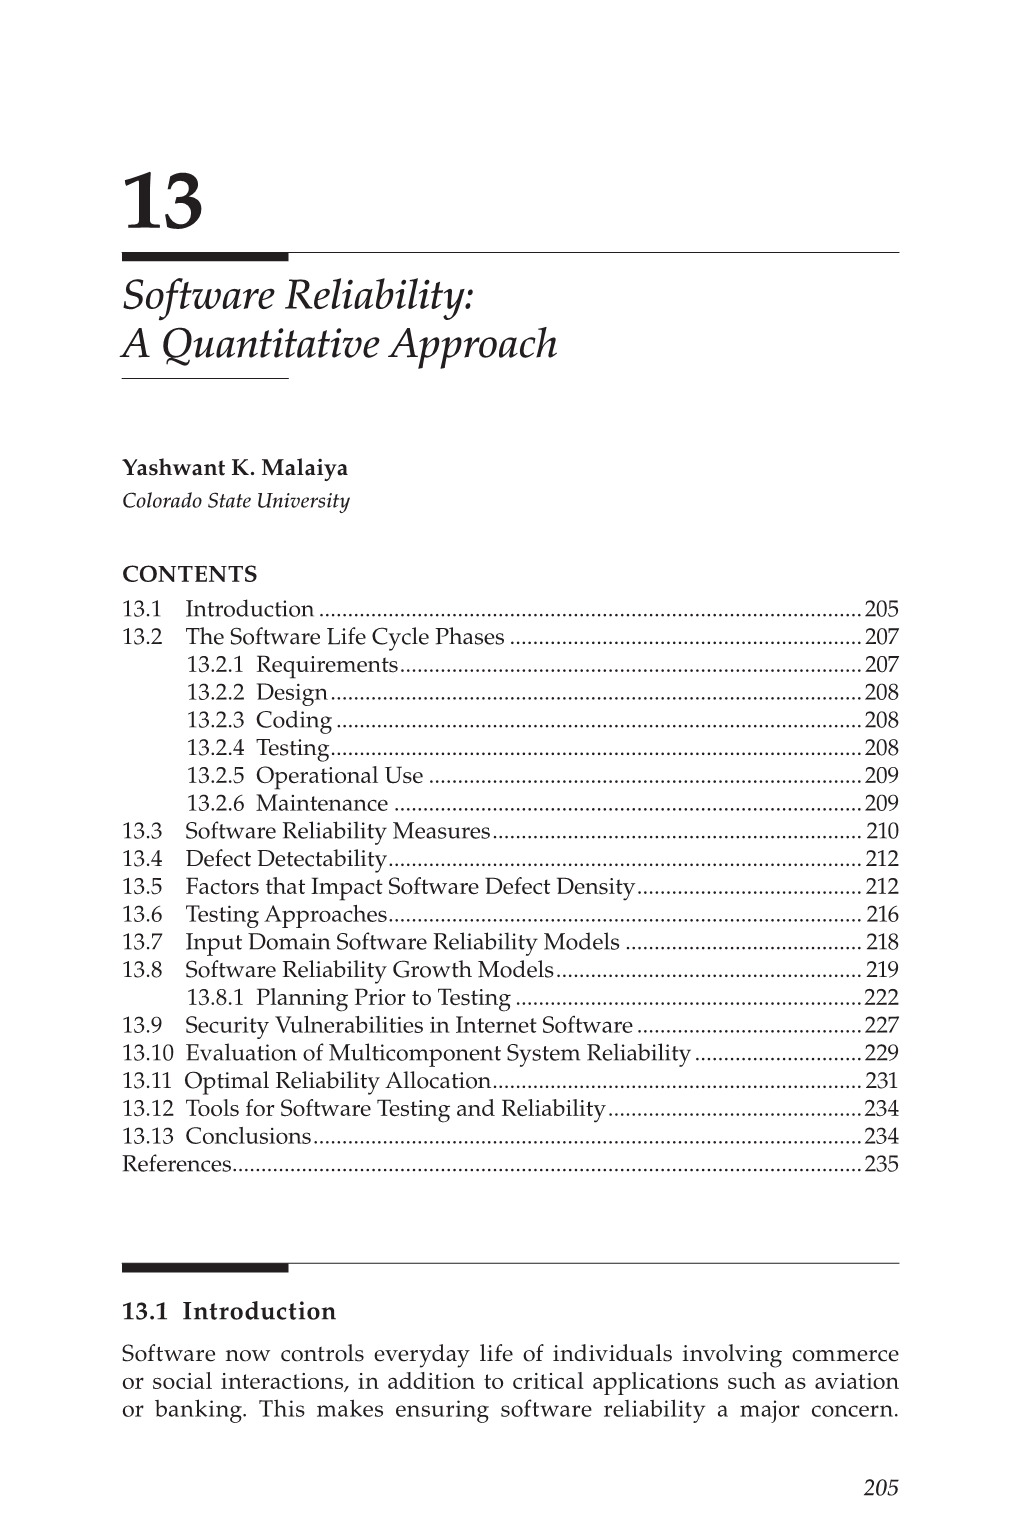 Software Reliability: a Quantitative Approach